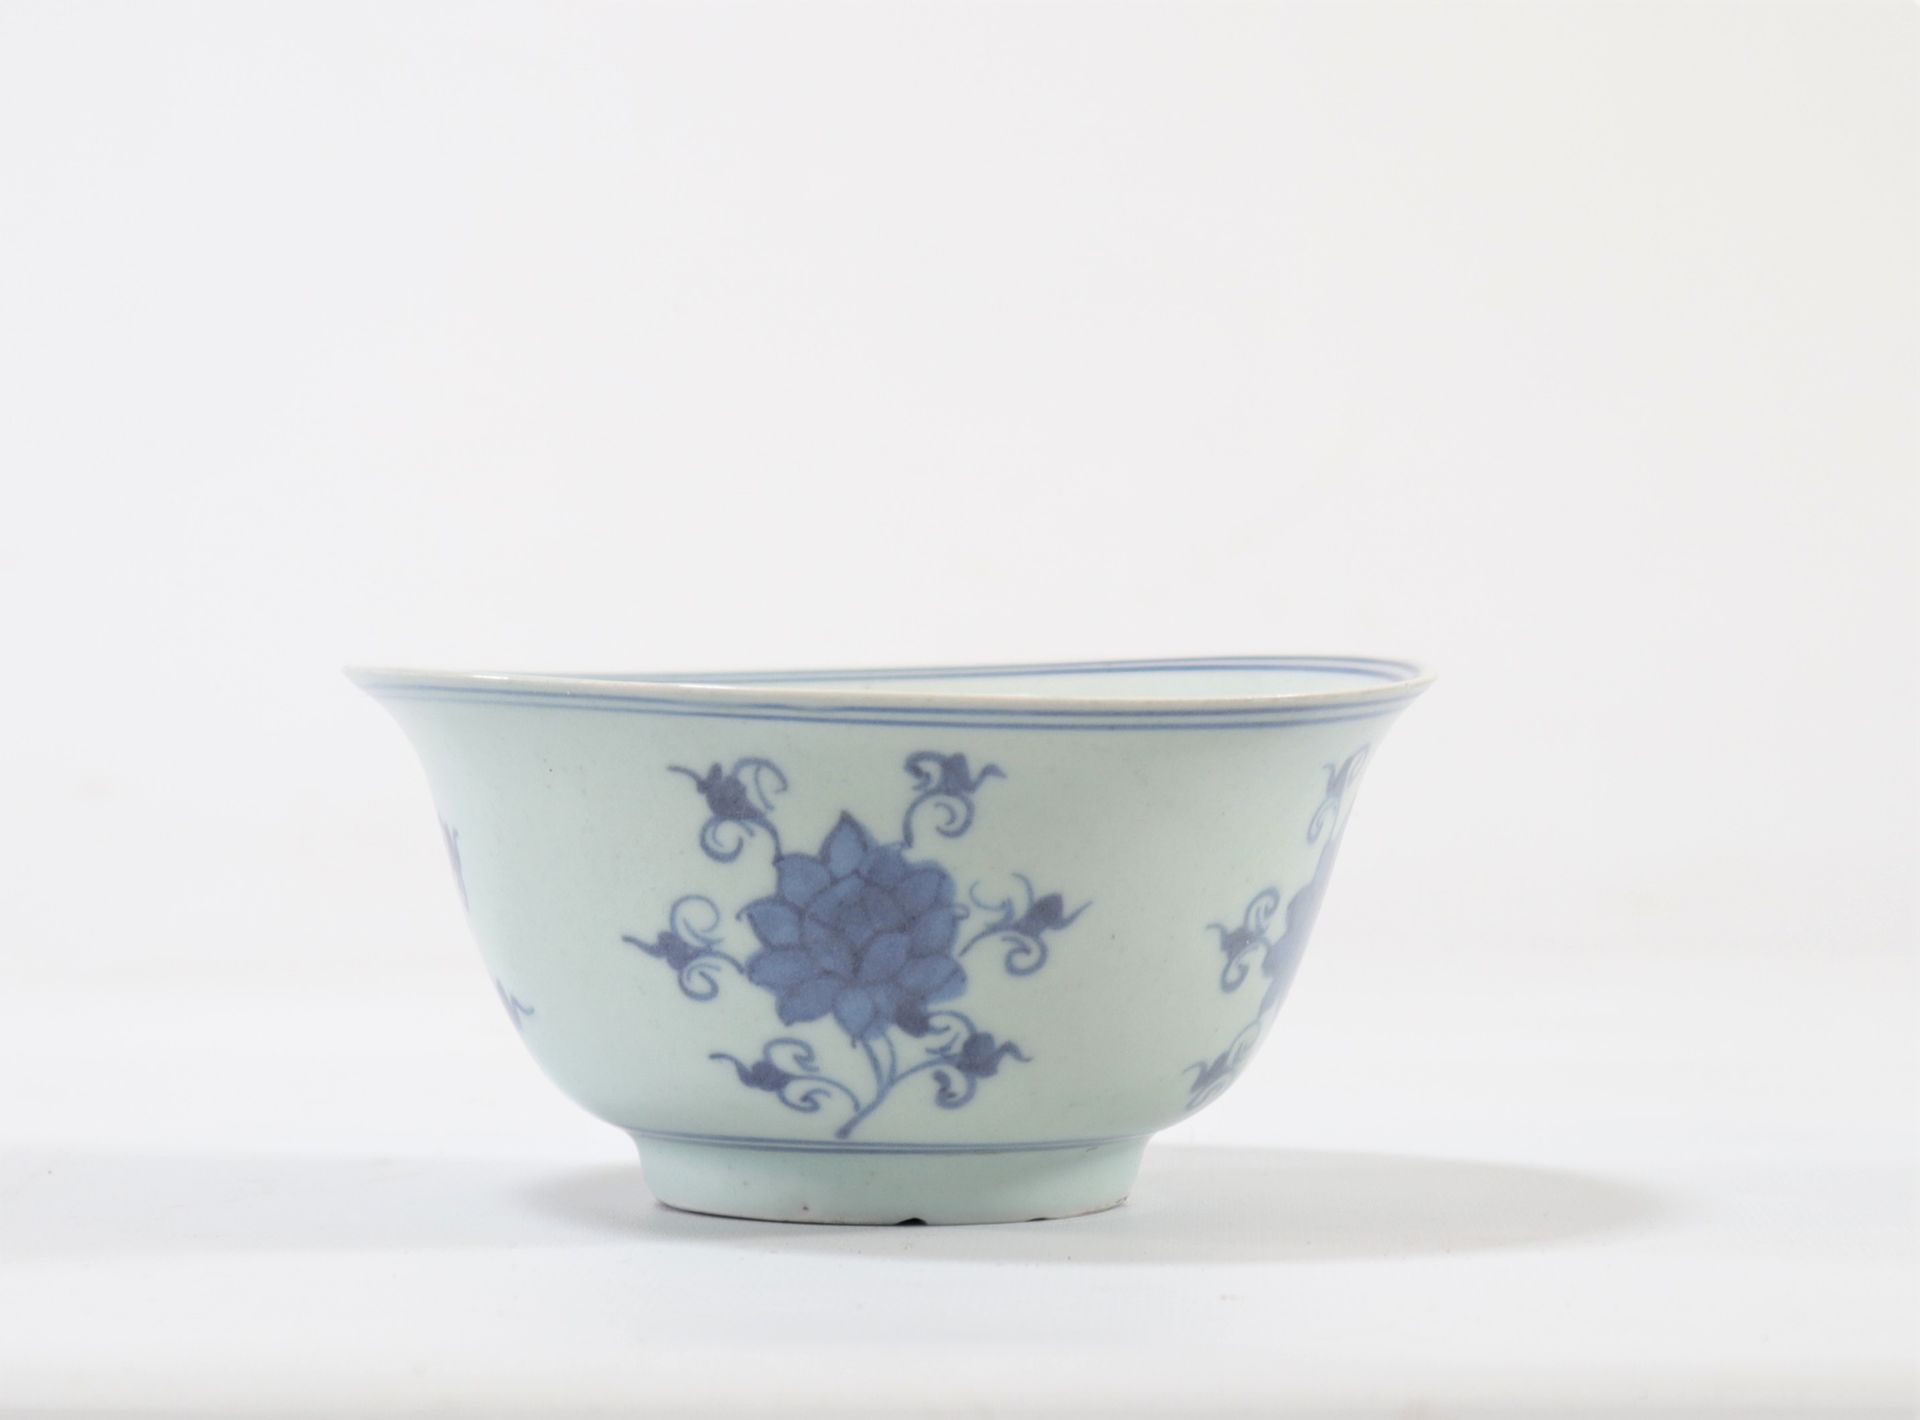 China porcelain bowl white blue mark under the piece - Image 2 of 4